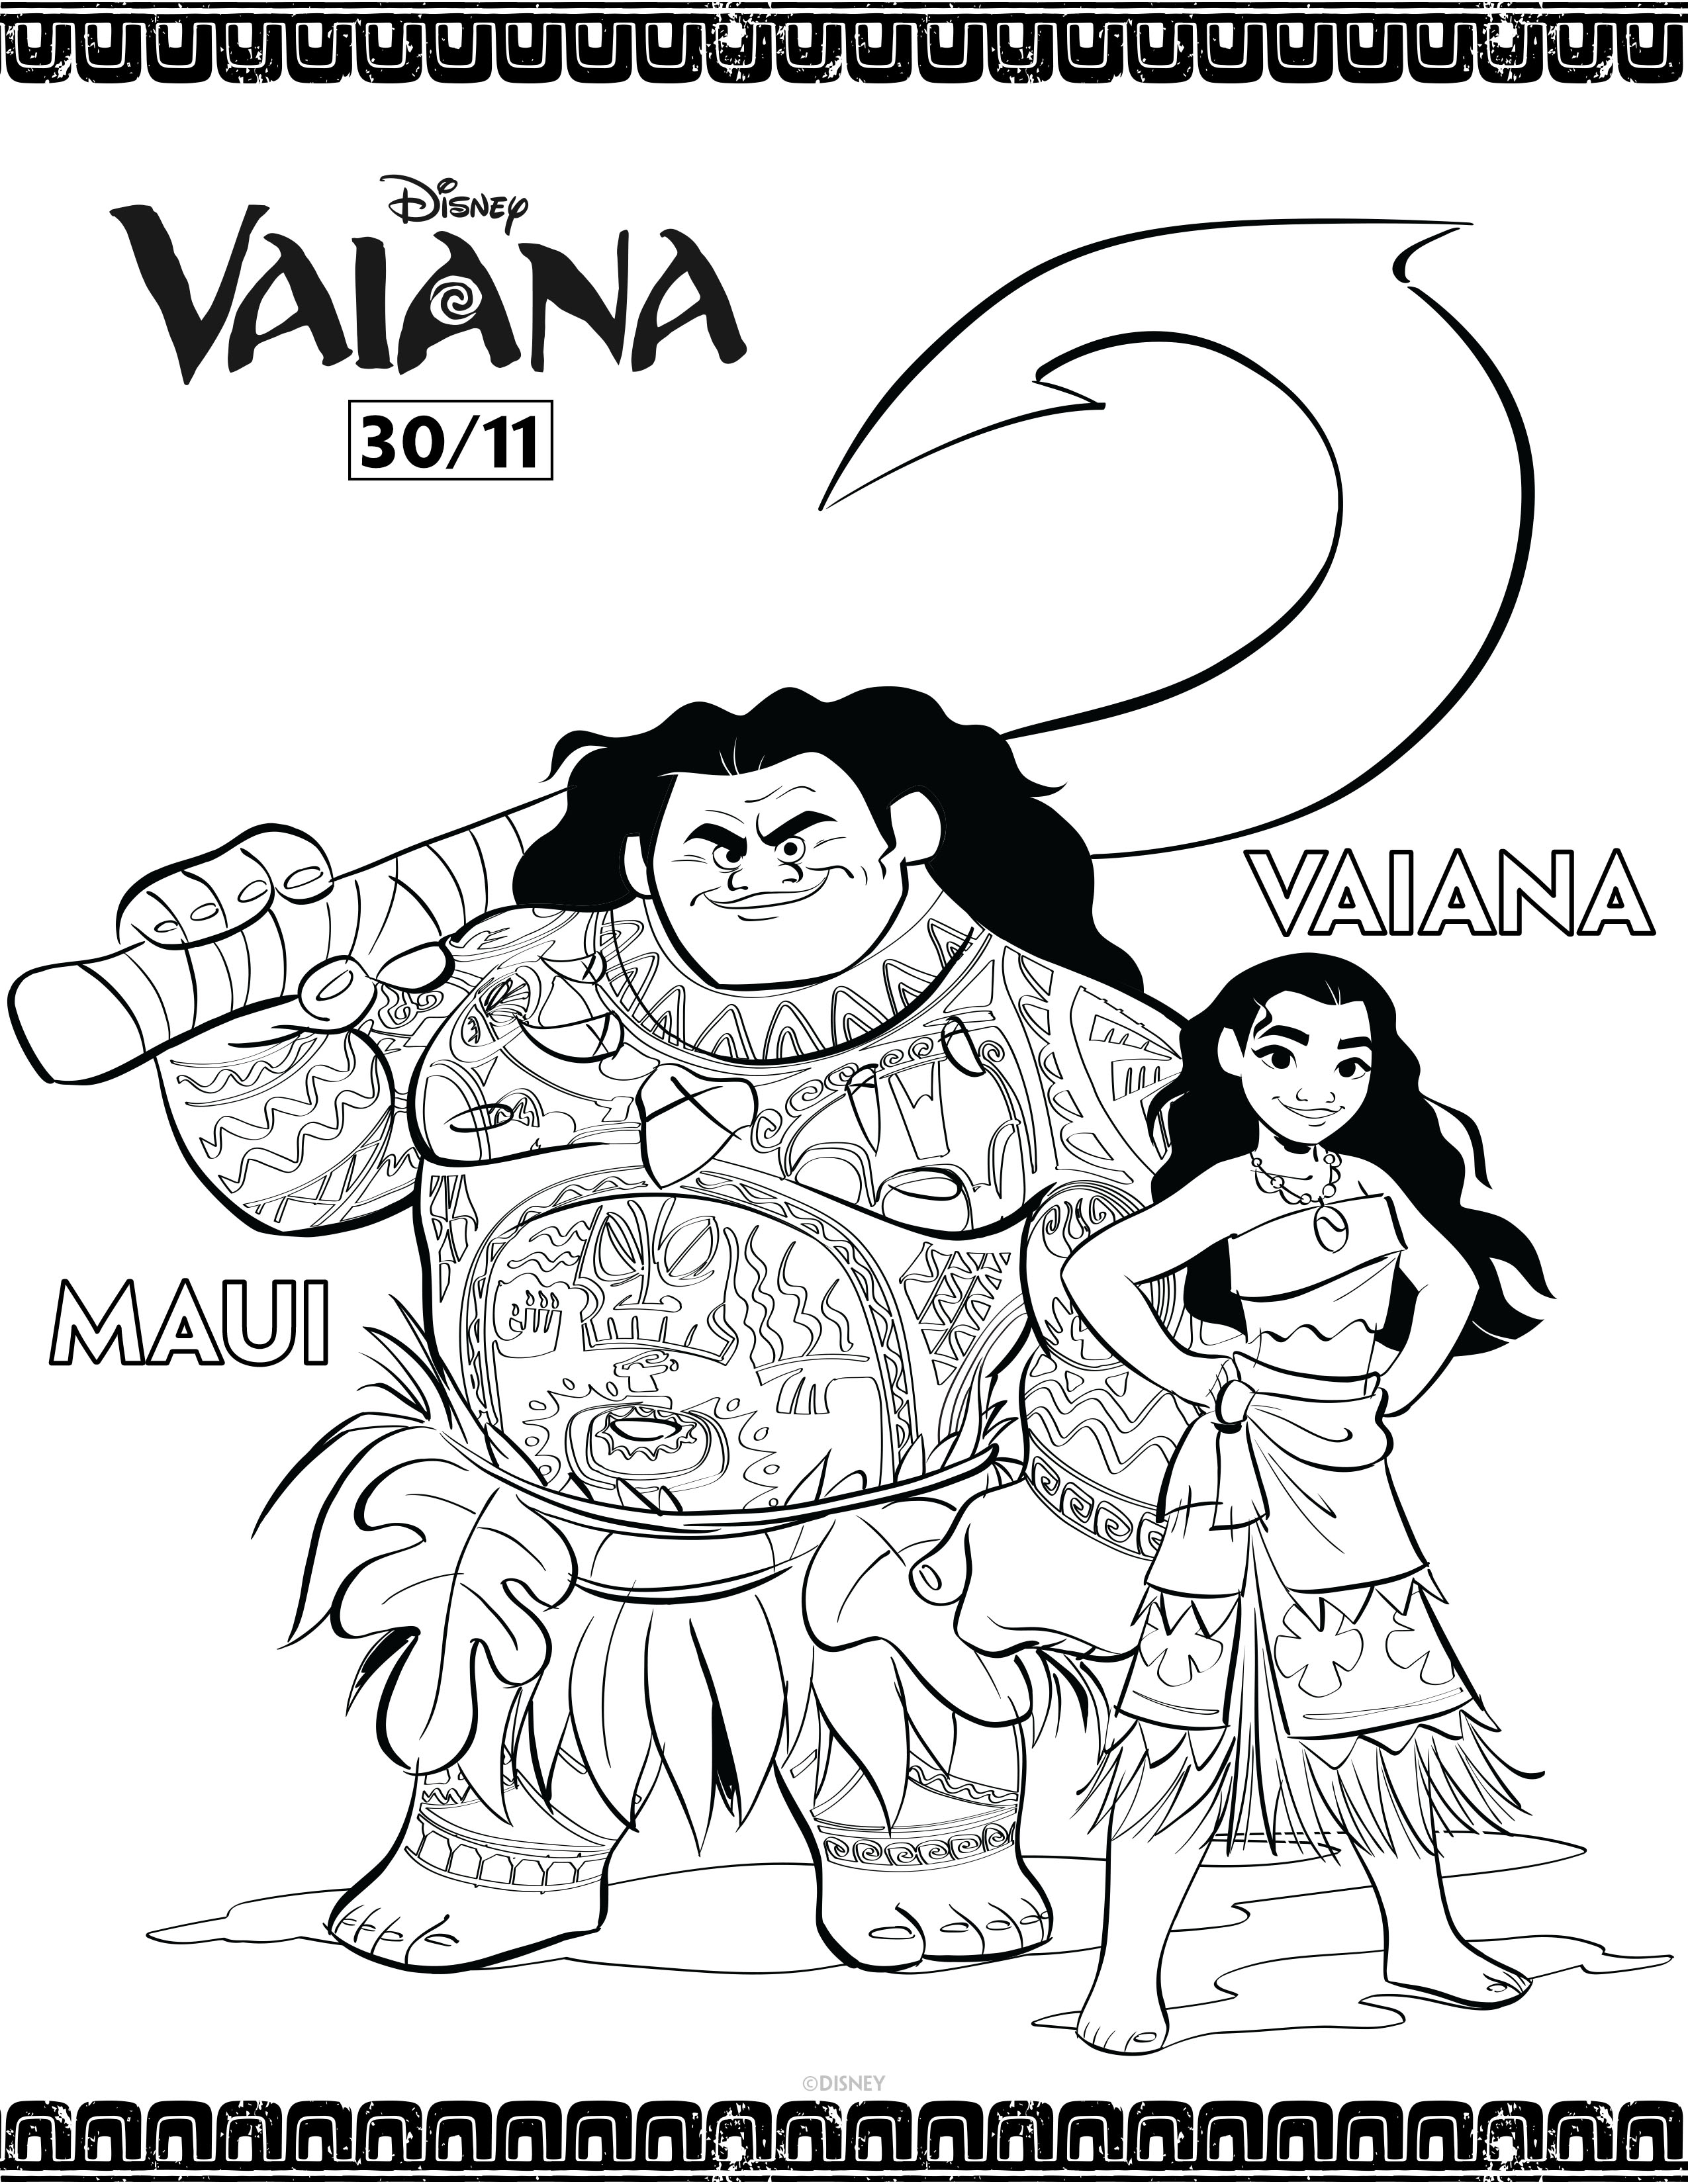 A beautiful coloring of Maui and Vaiana